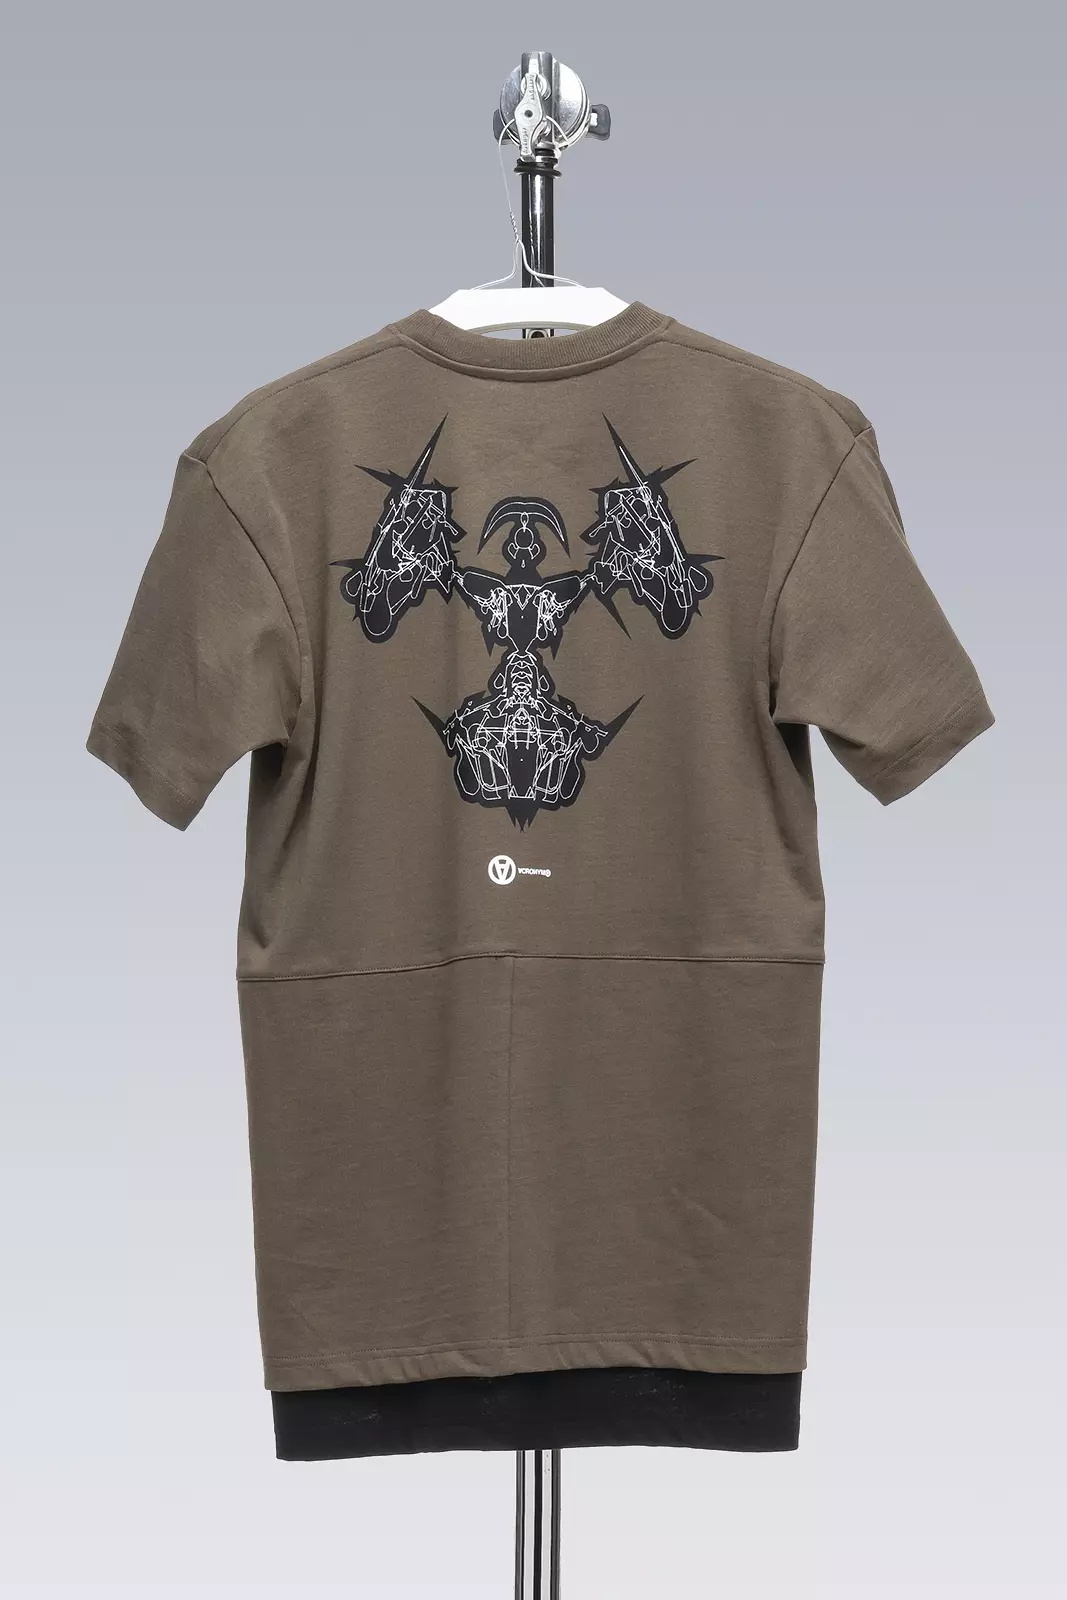 S28-PR-B 100% Organic Cotton Short Sleeve T-shirt Black - 4